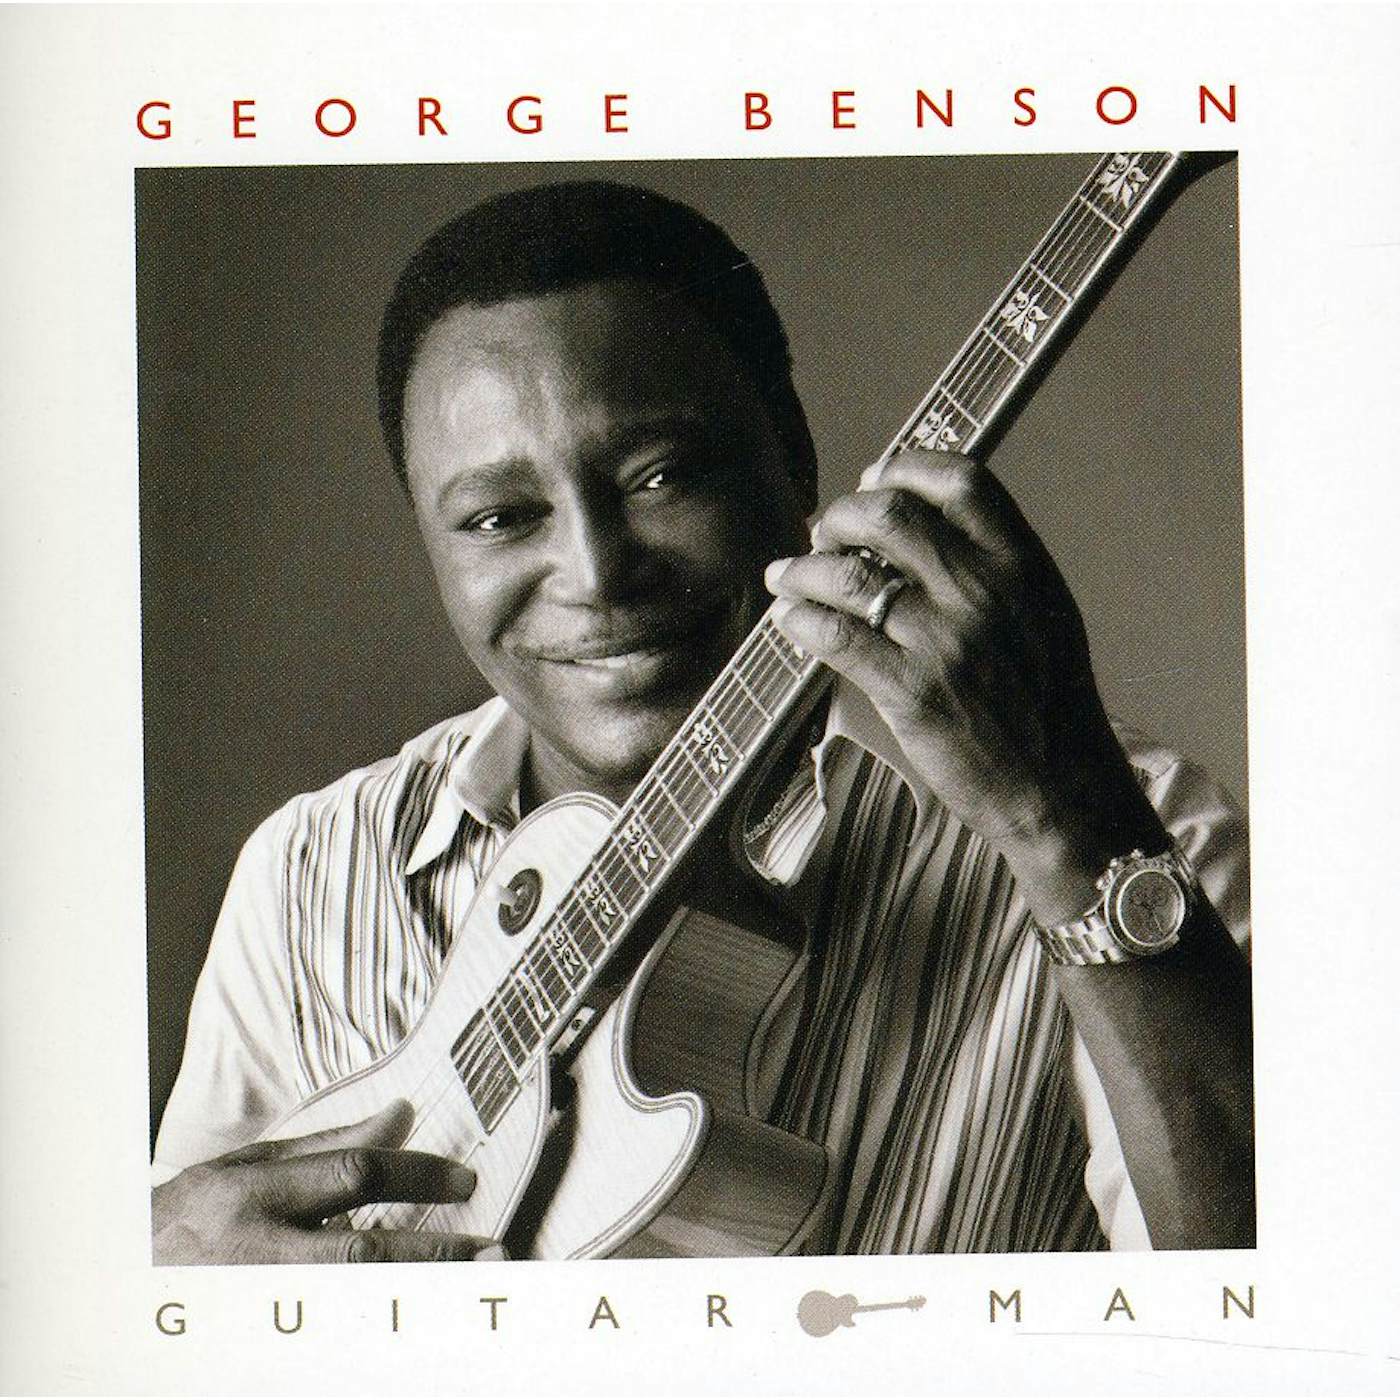 George Benson GUITAR MAN CD